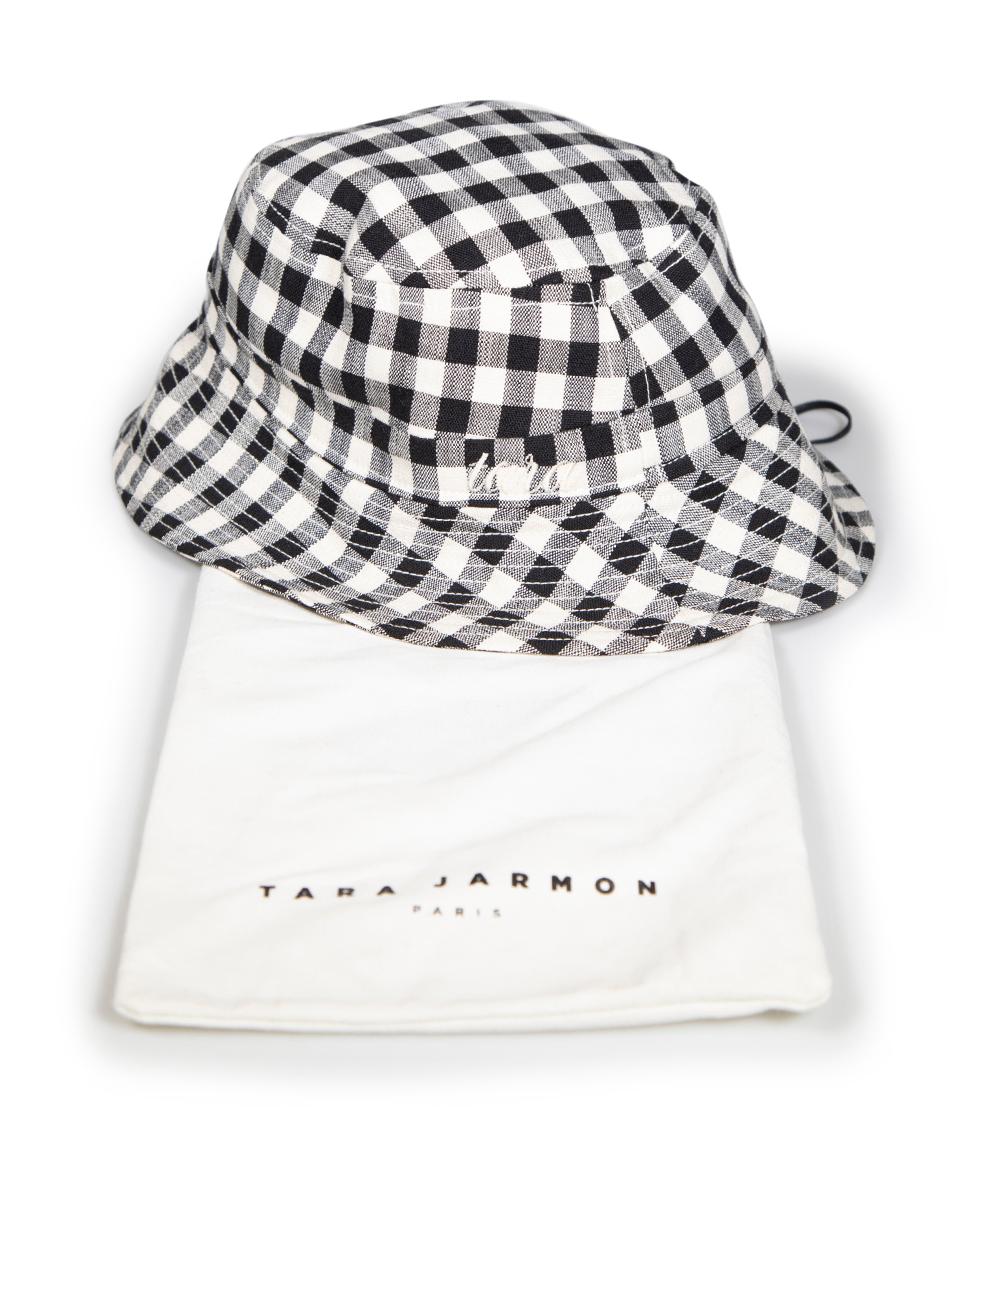 Tara Jarmon Gingham Pattern Bucket Hat For Sale 2